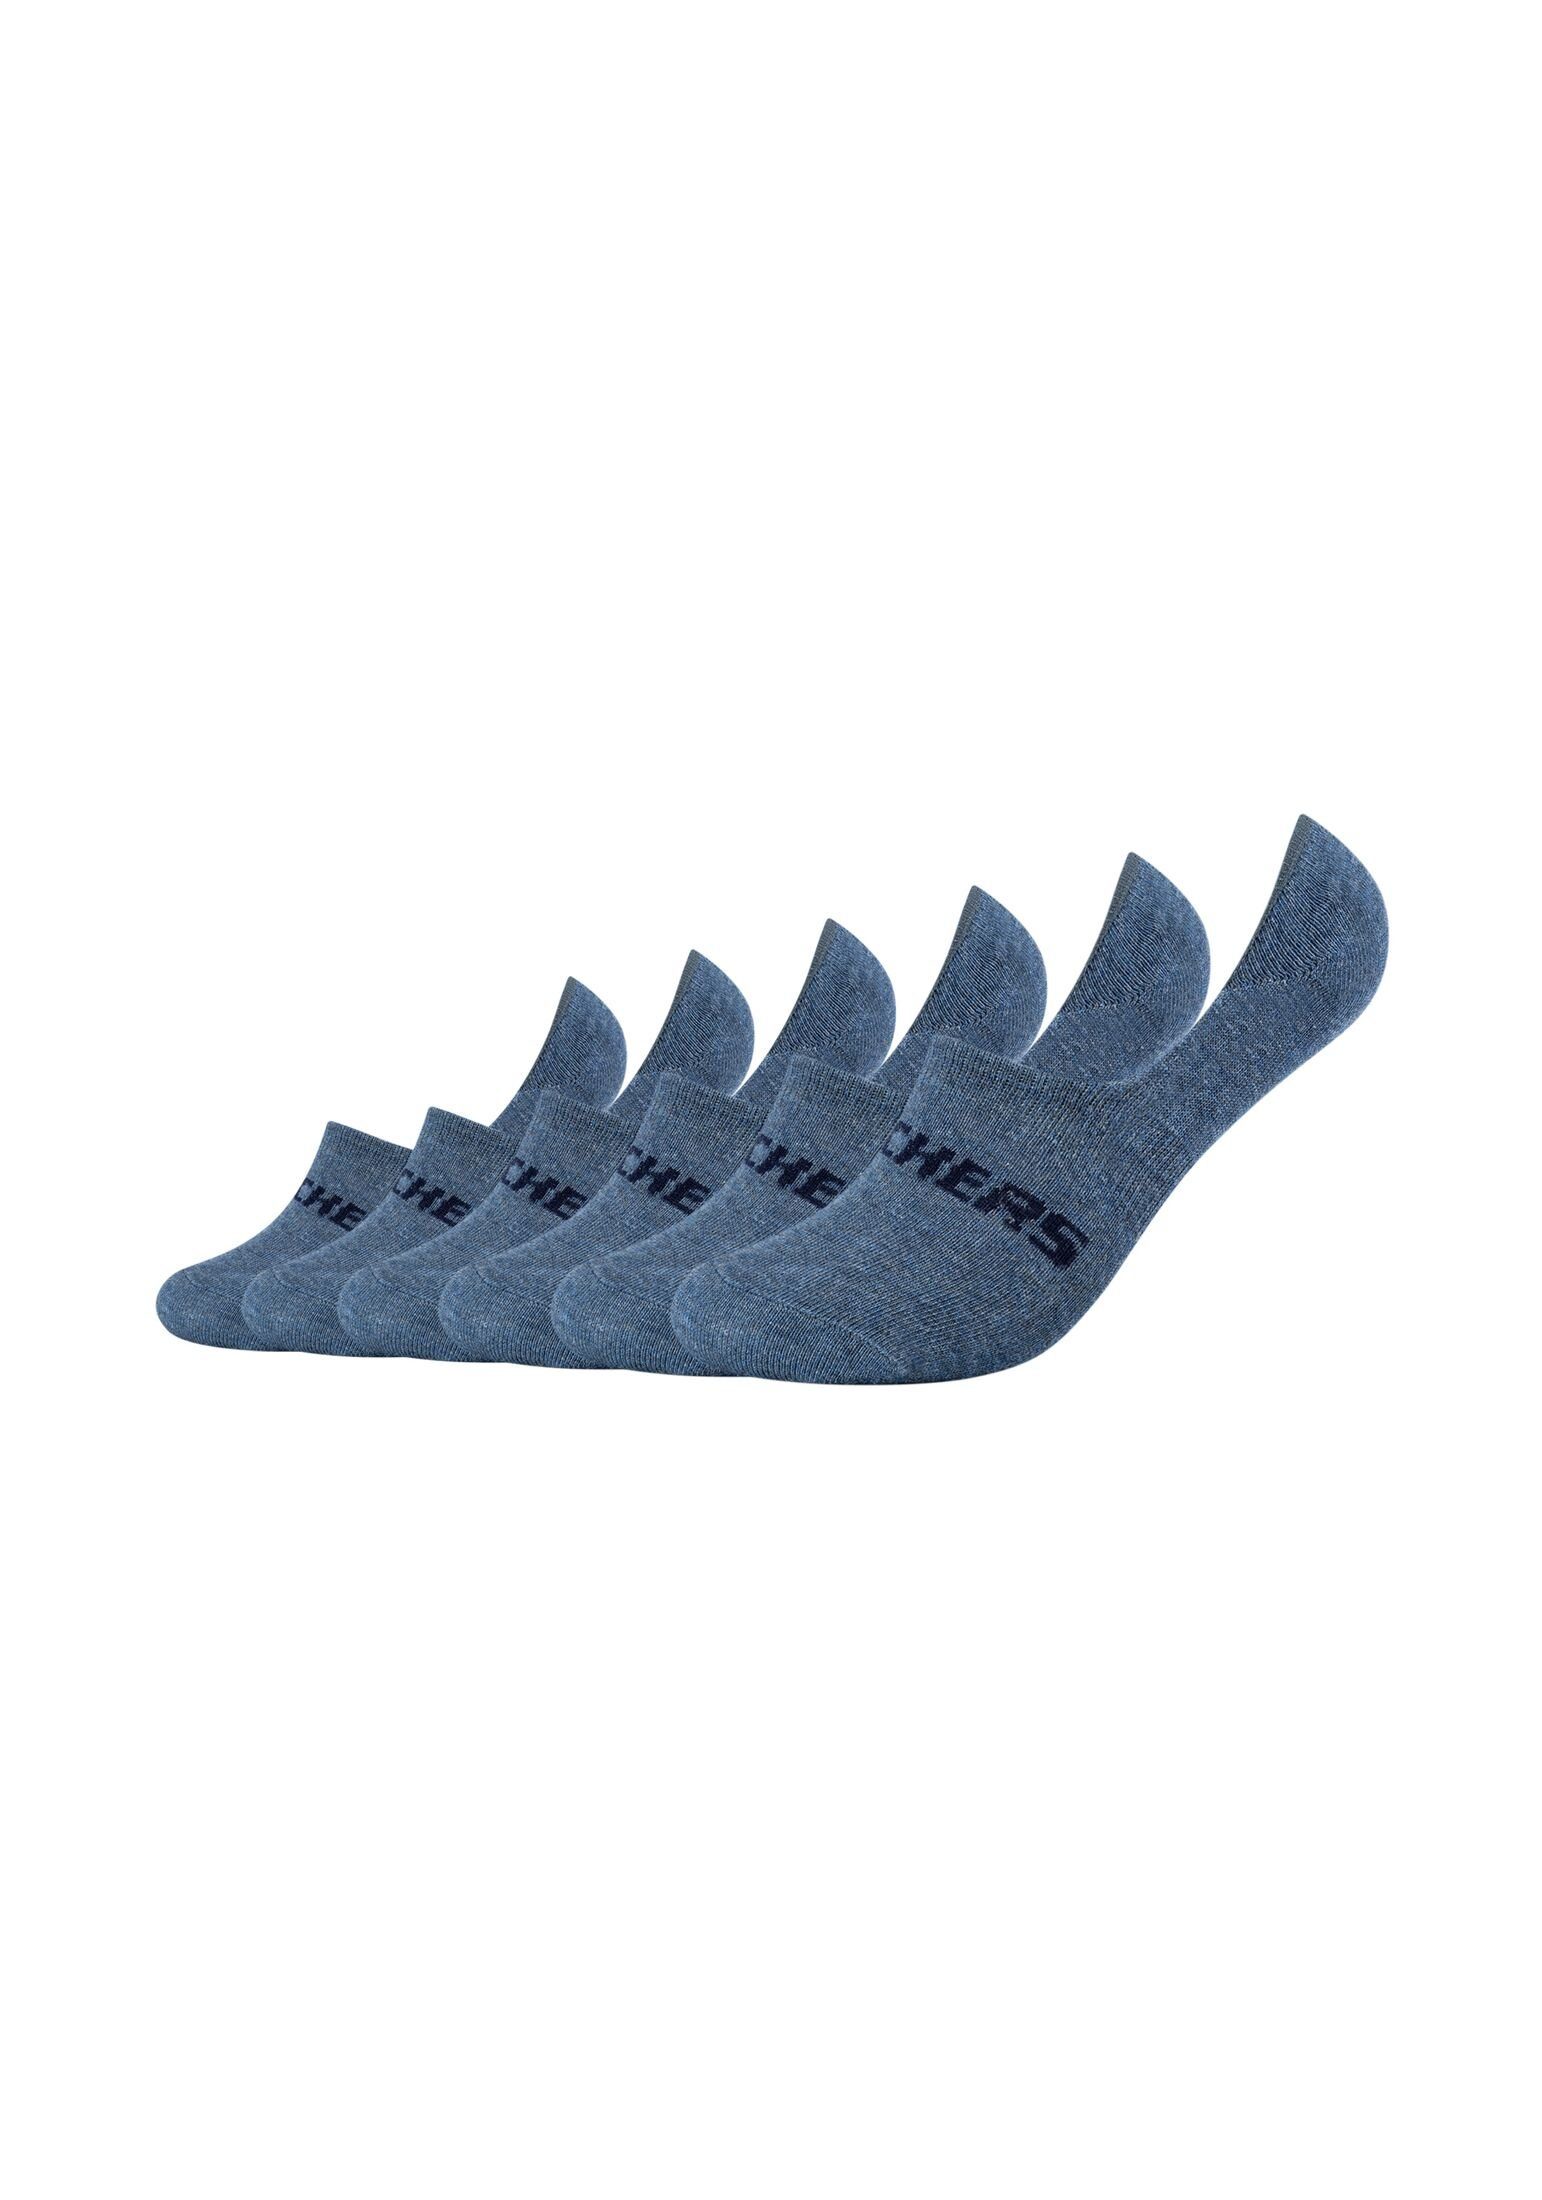 Schnitt Skechers sichtbar mit (6-Paar) (6 in Füßlinge Socke Ausstattung, Sneaker Paar) Mesh-Ventilation nicht niedrigem dank